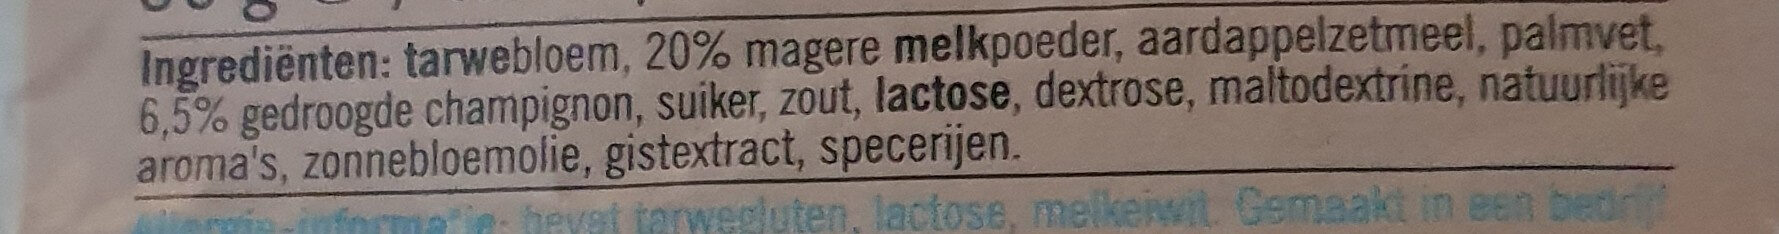 Romige Champignonsaus - Ingredients - nl